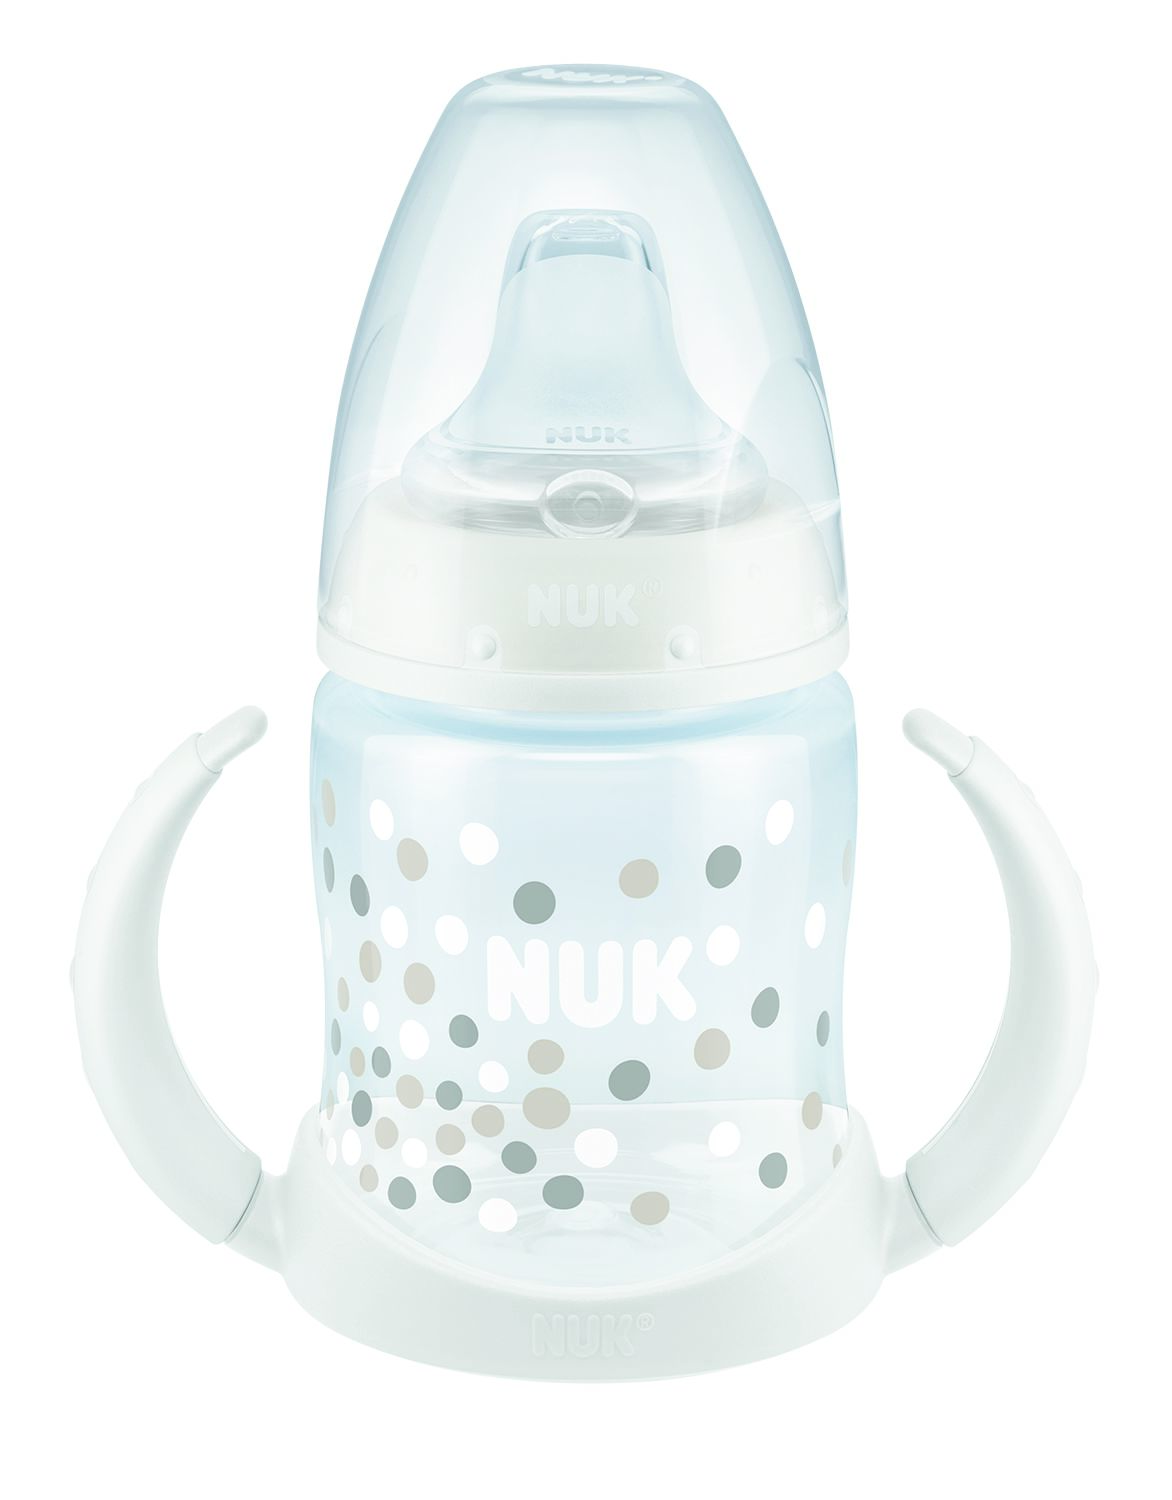 NUK® Smooth Flow Bottle Newborn Gift Set Product Image 1 of 10